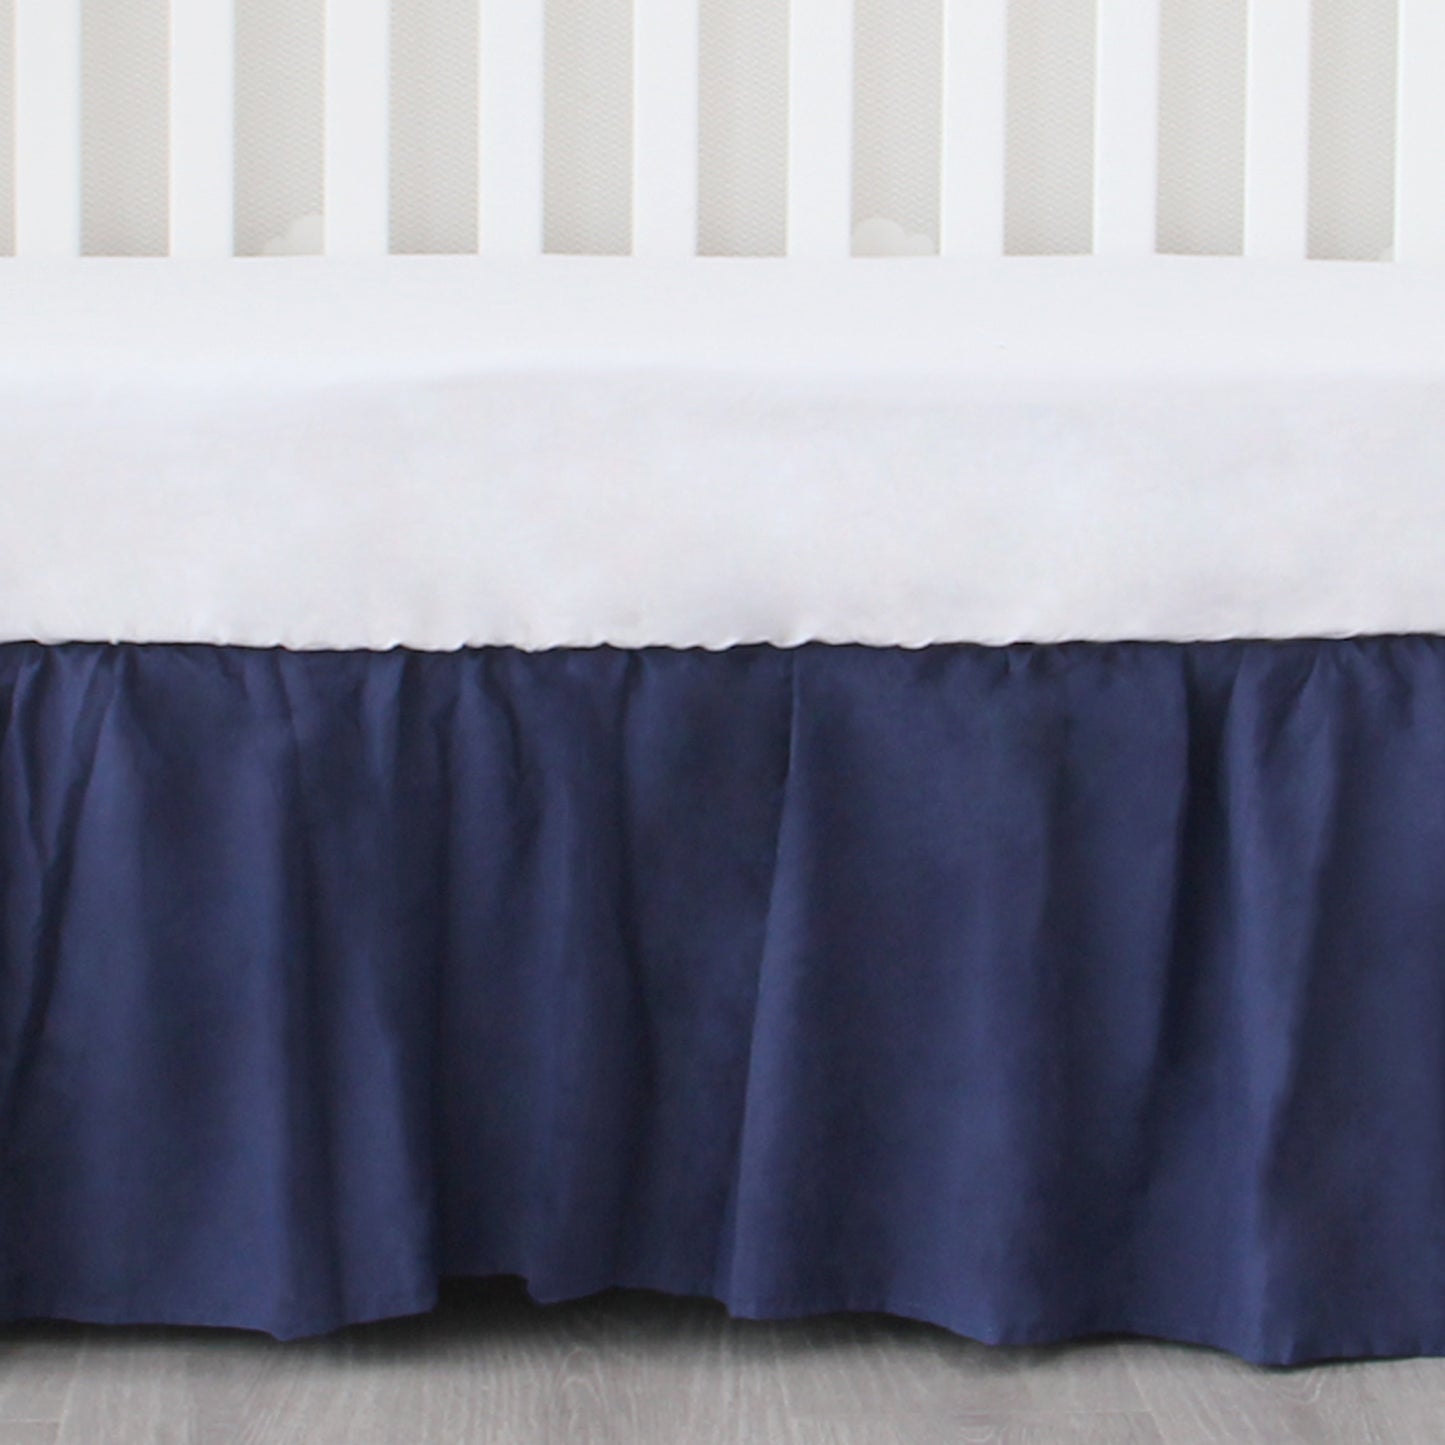 Crib Skirt - Dust Ruffle, Elastic Adjustable Fit, Easy On/Off, 14" Drop, Navy (for Standard Crib/ Toddler Bed) - Biloban Online Store